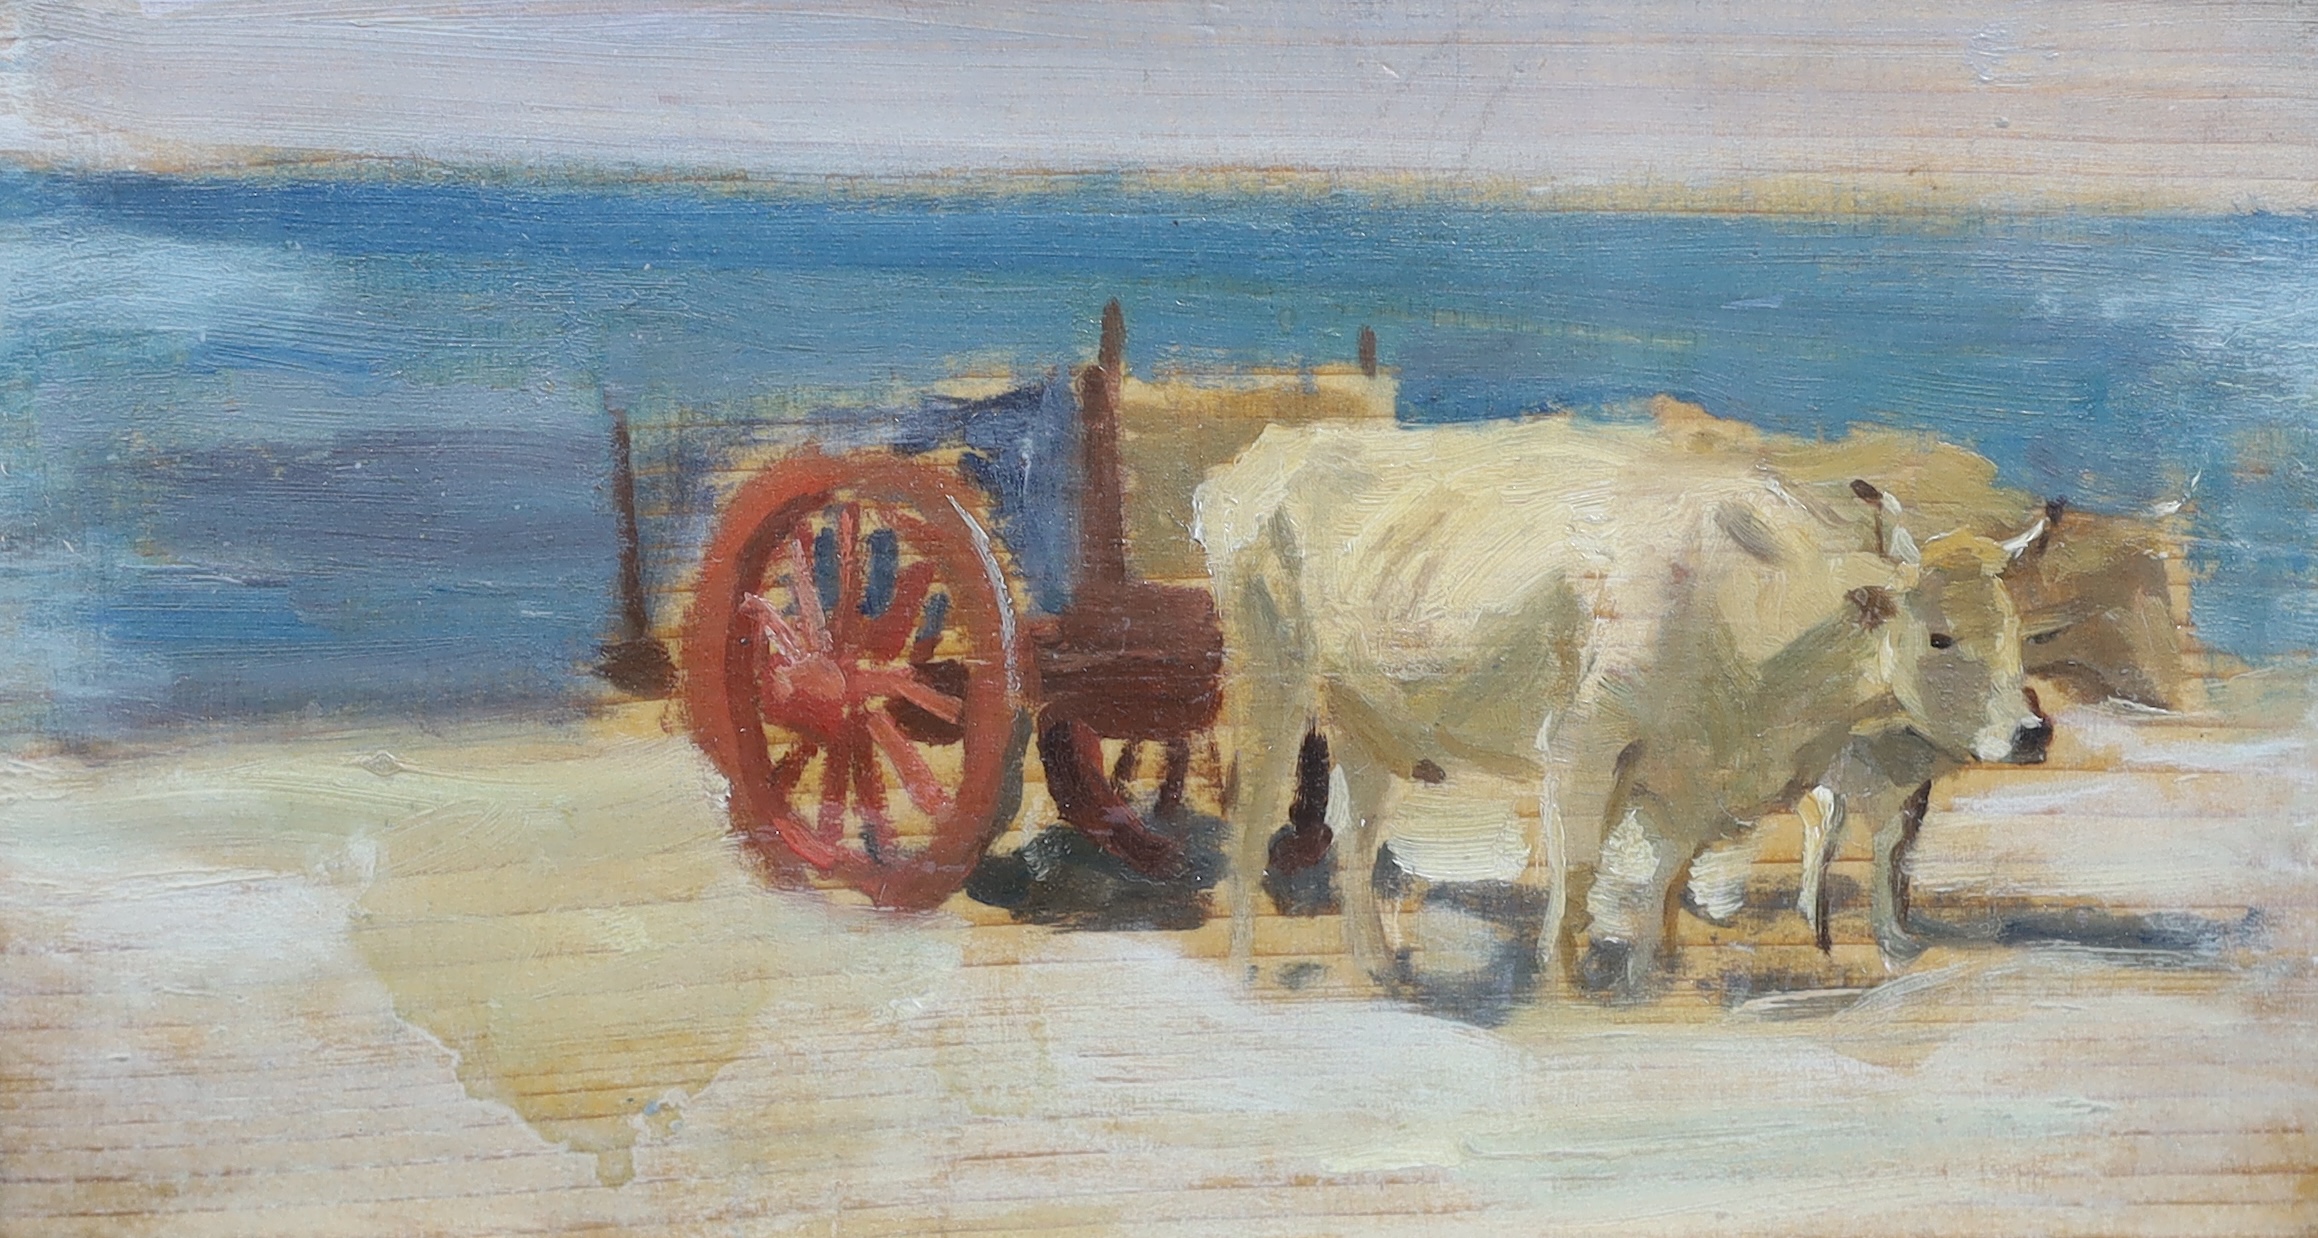 Arthur Lemon (1850-1912), oil on wooden panel, Sketch of oxen pulling a cart, 10 x 19cm